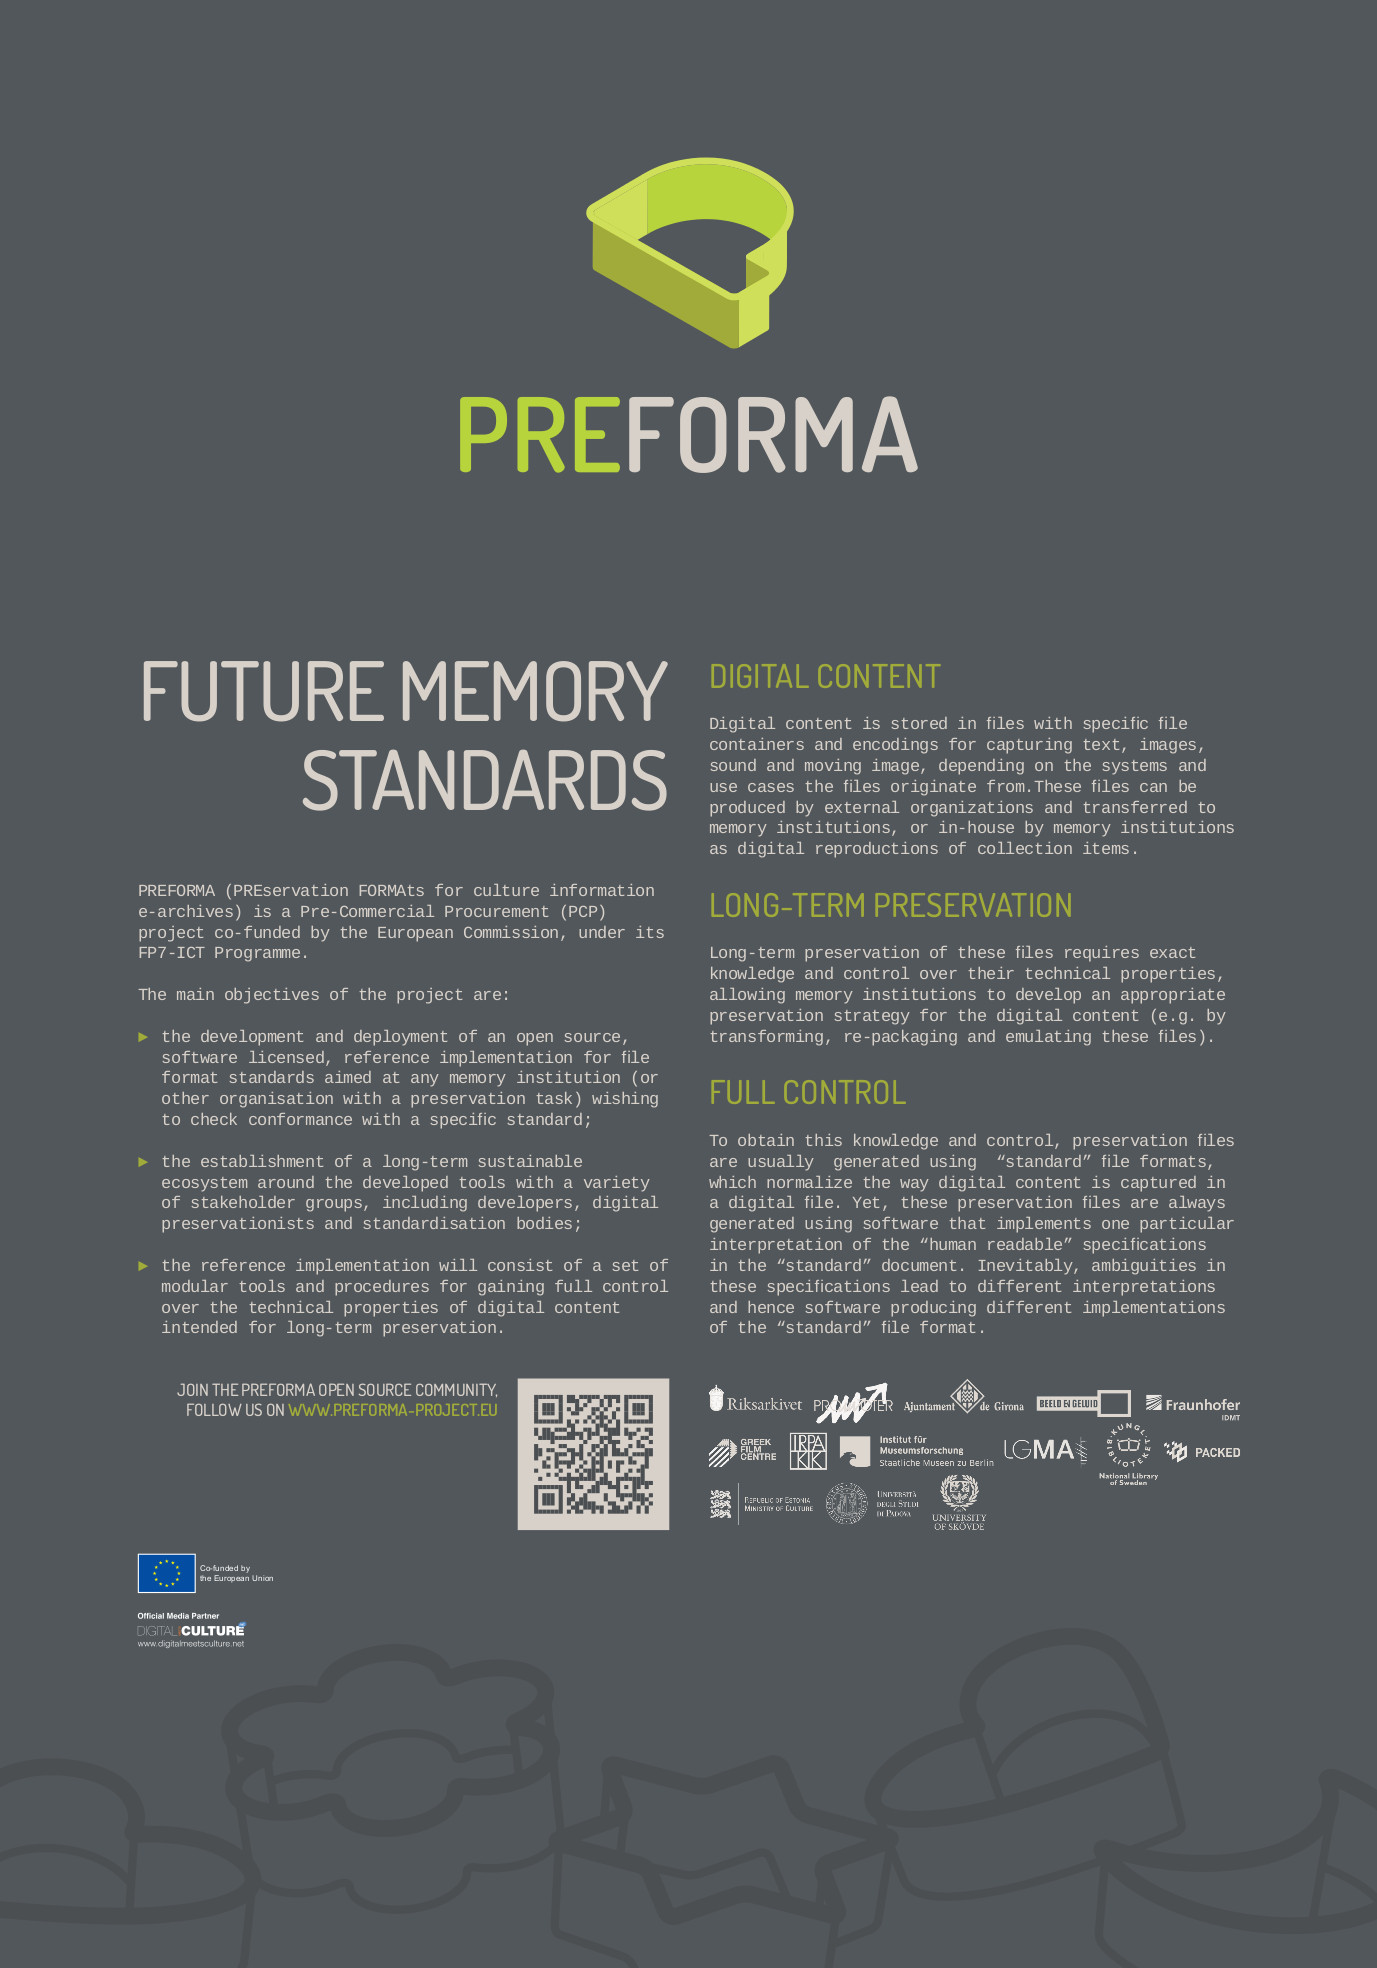 22. PREFORMA Project: Future Memory Standards